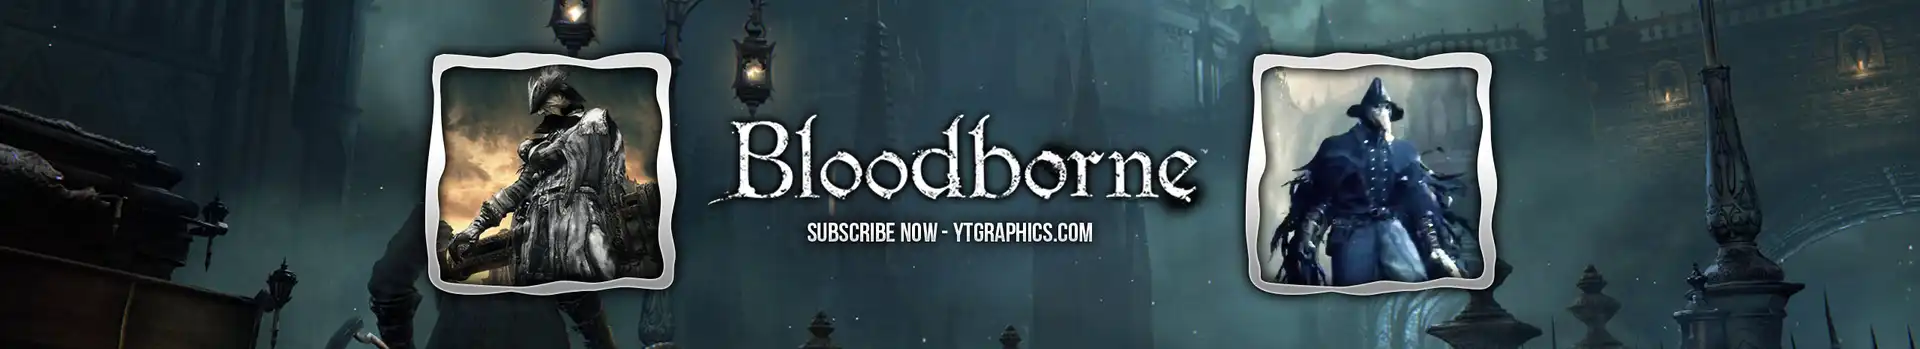 Bloodborne preview